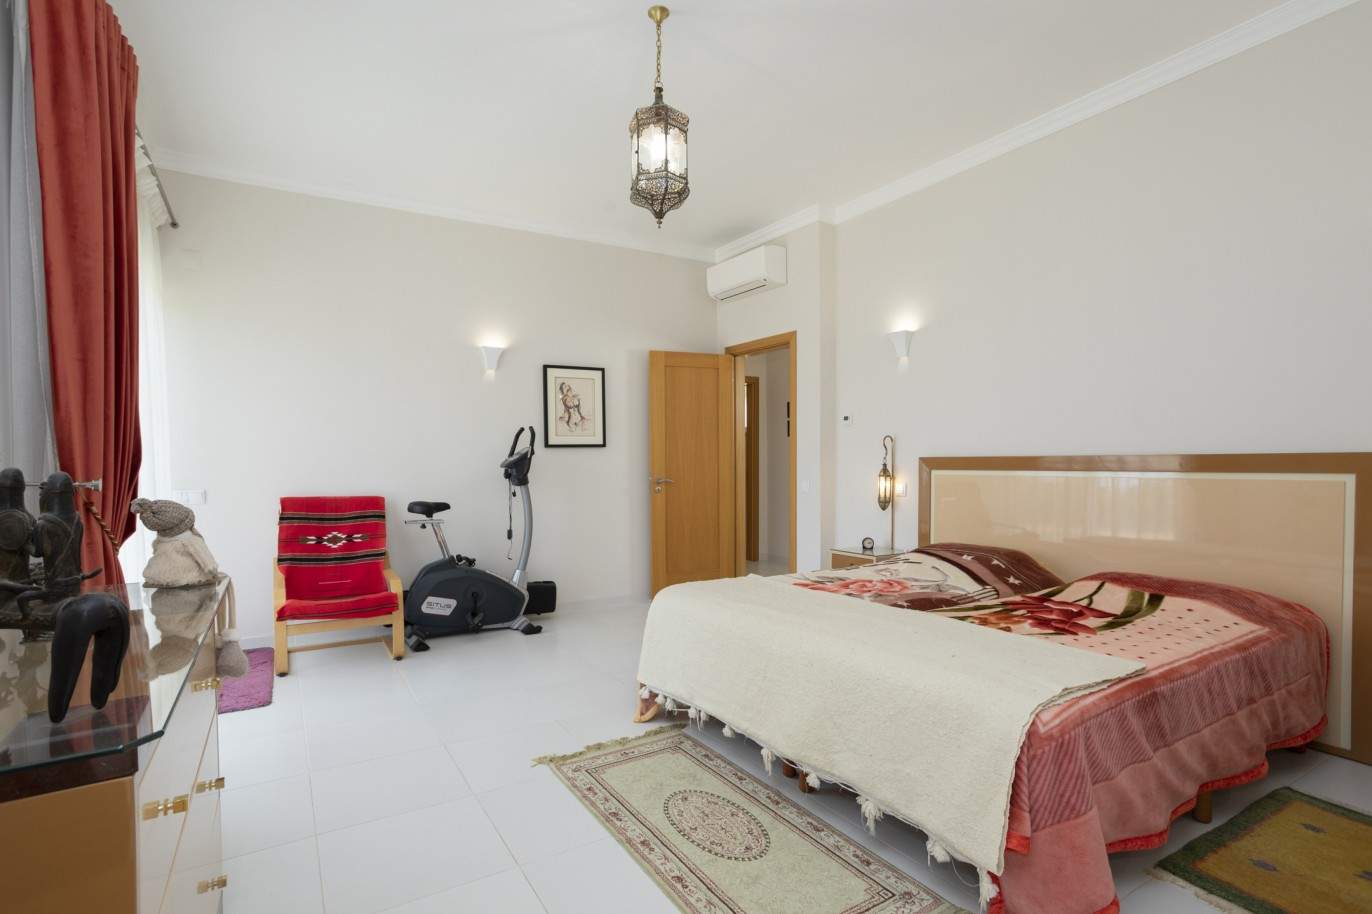 3 Bedroom Villa with swimming pool, for sale in Estoi, Algarve_201377